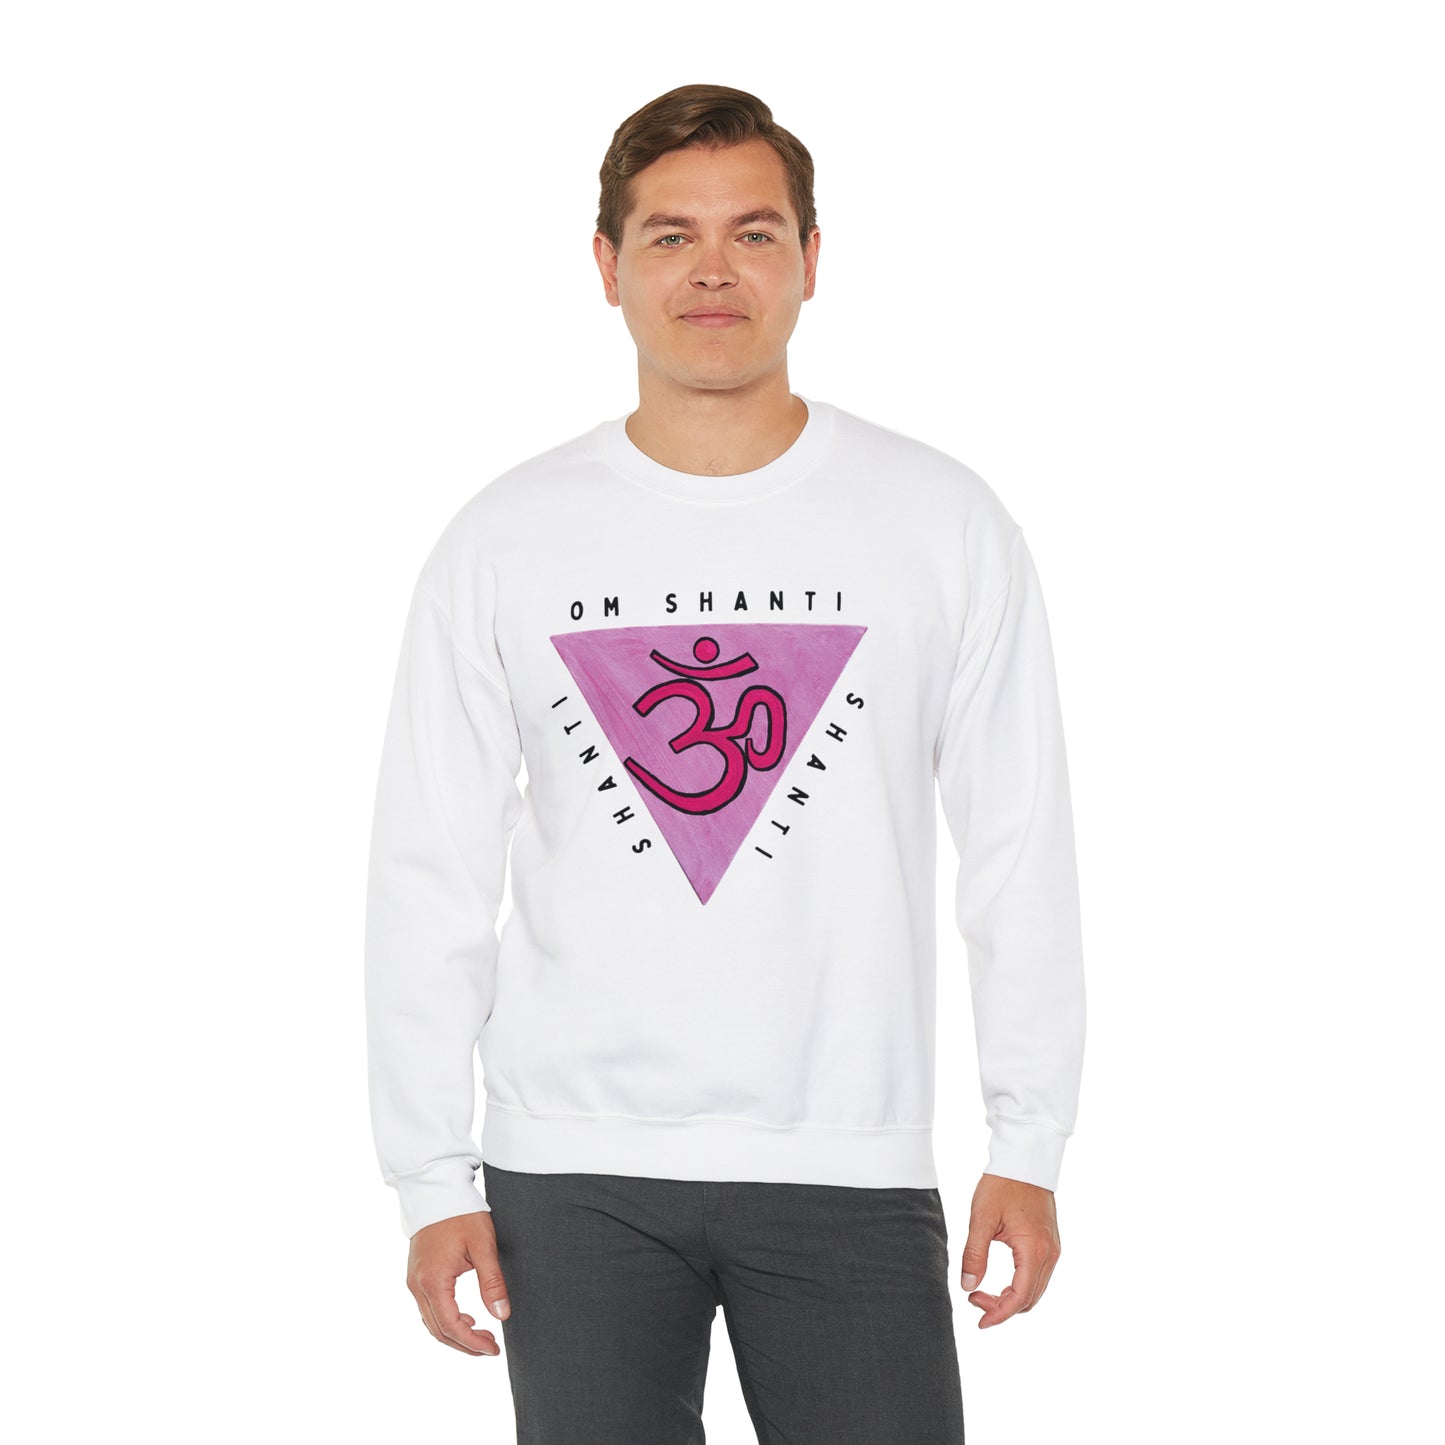 Pink Triangle OM Crewneck Sweatshirt